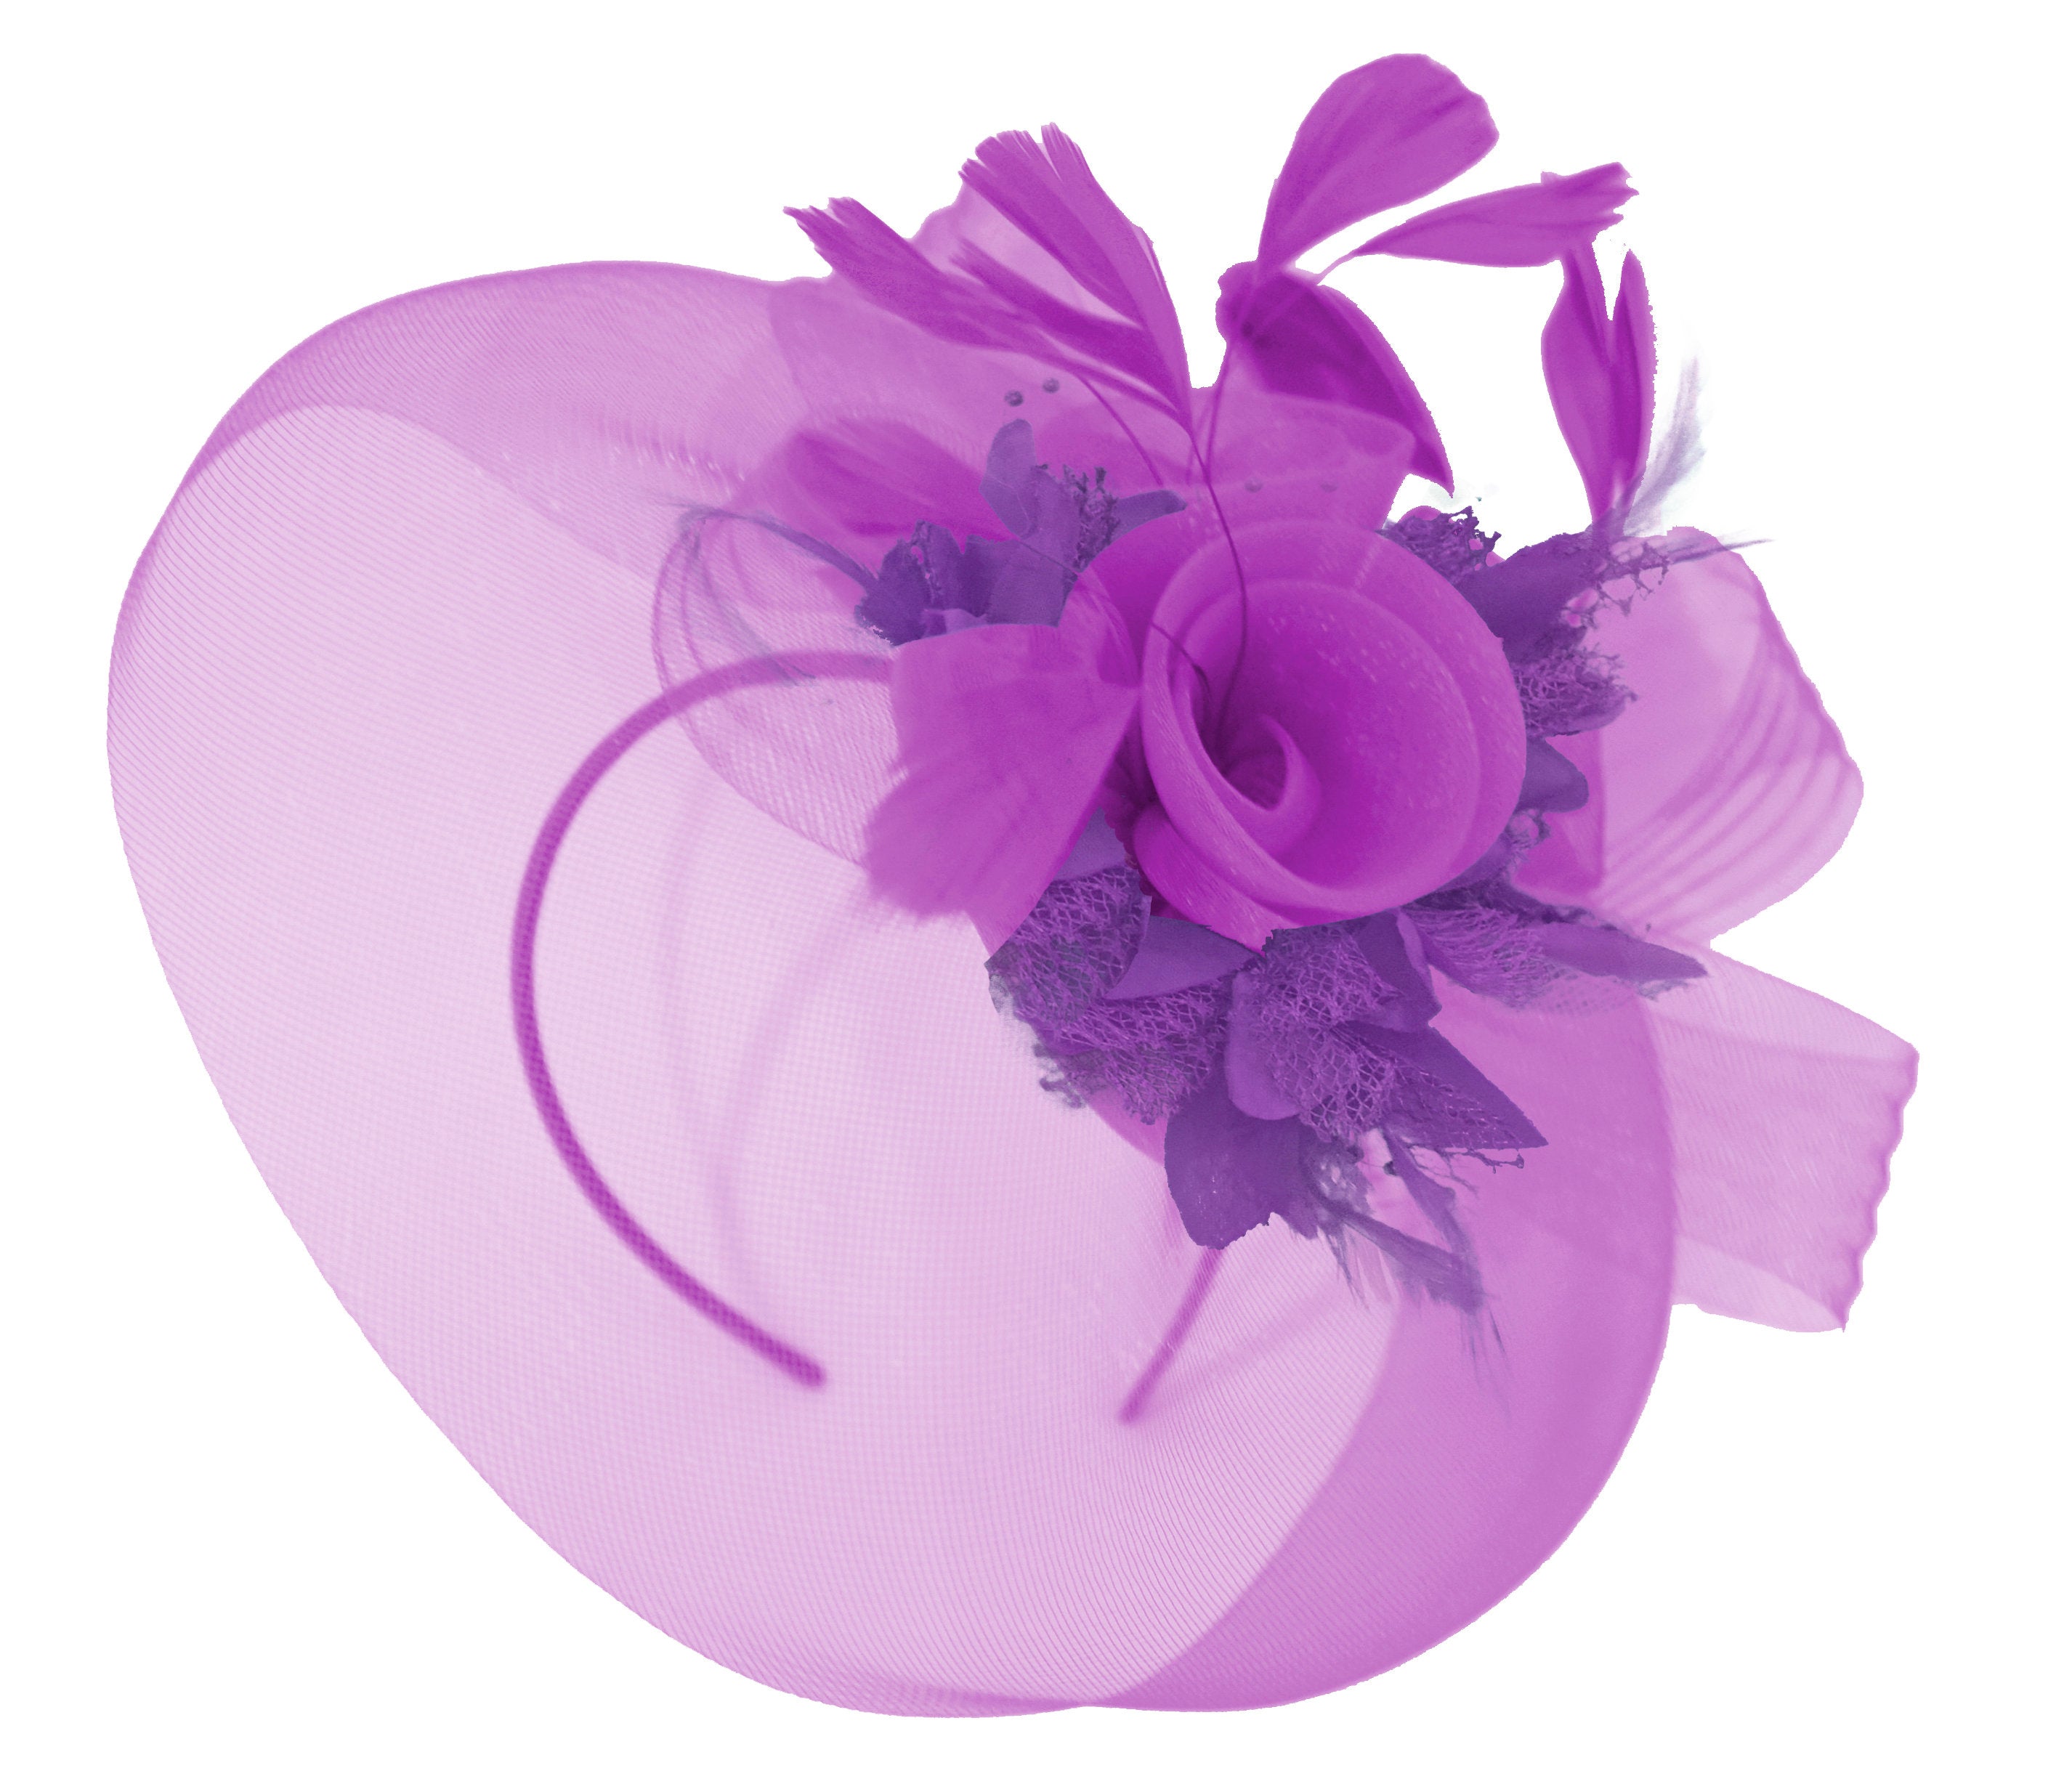 Caprilite Purple and Cadbury Fascinator on Headband Veil UK Wedding Ascot Races Hatinator